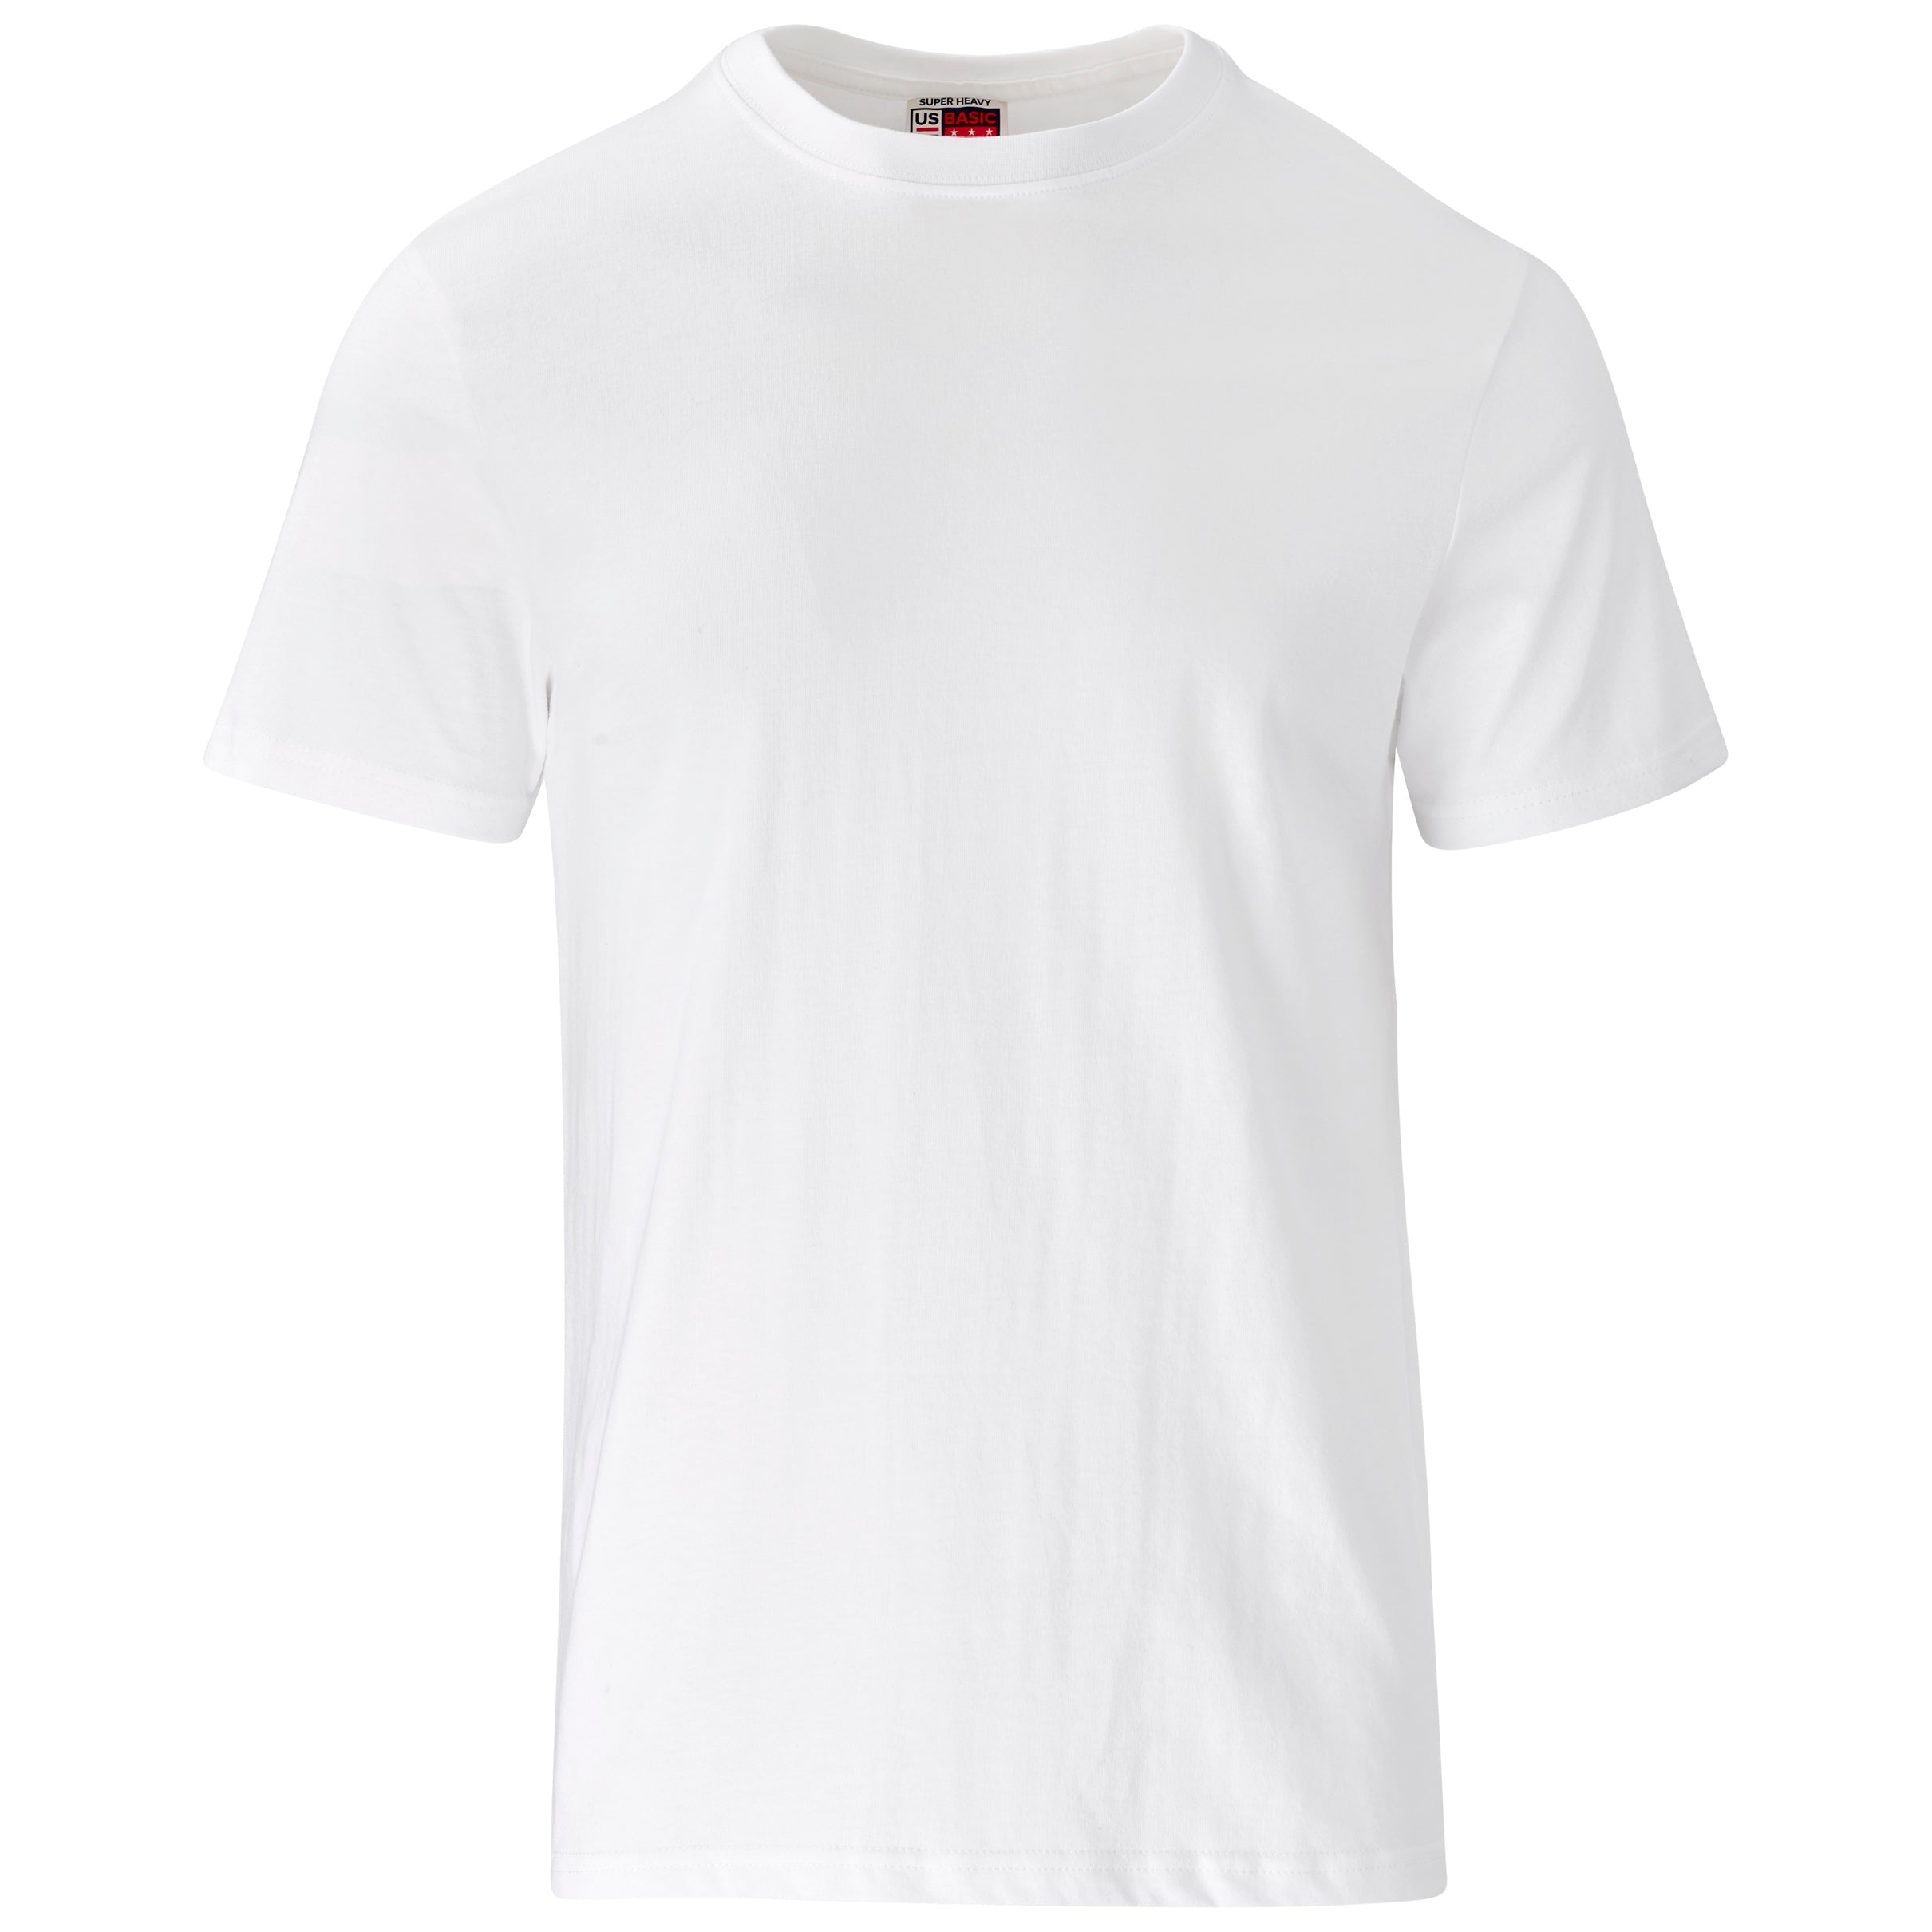 Unisex Super Club 180 T-Shirt-L-White-W